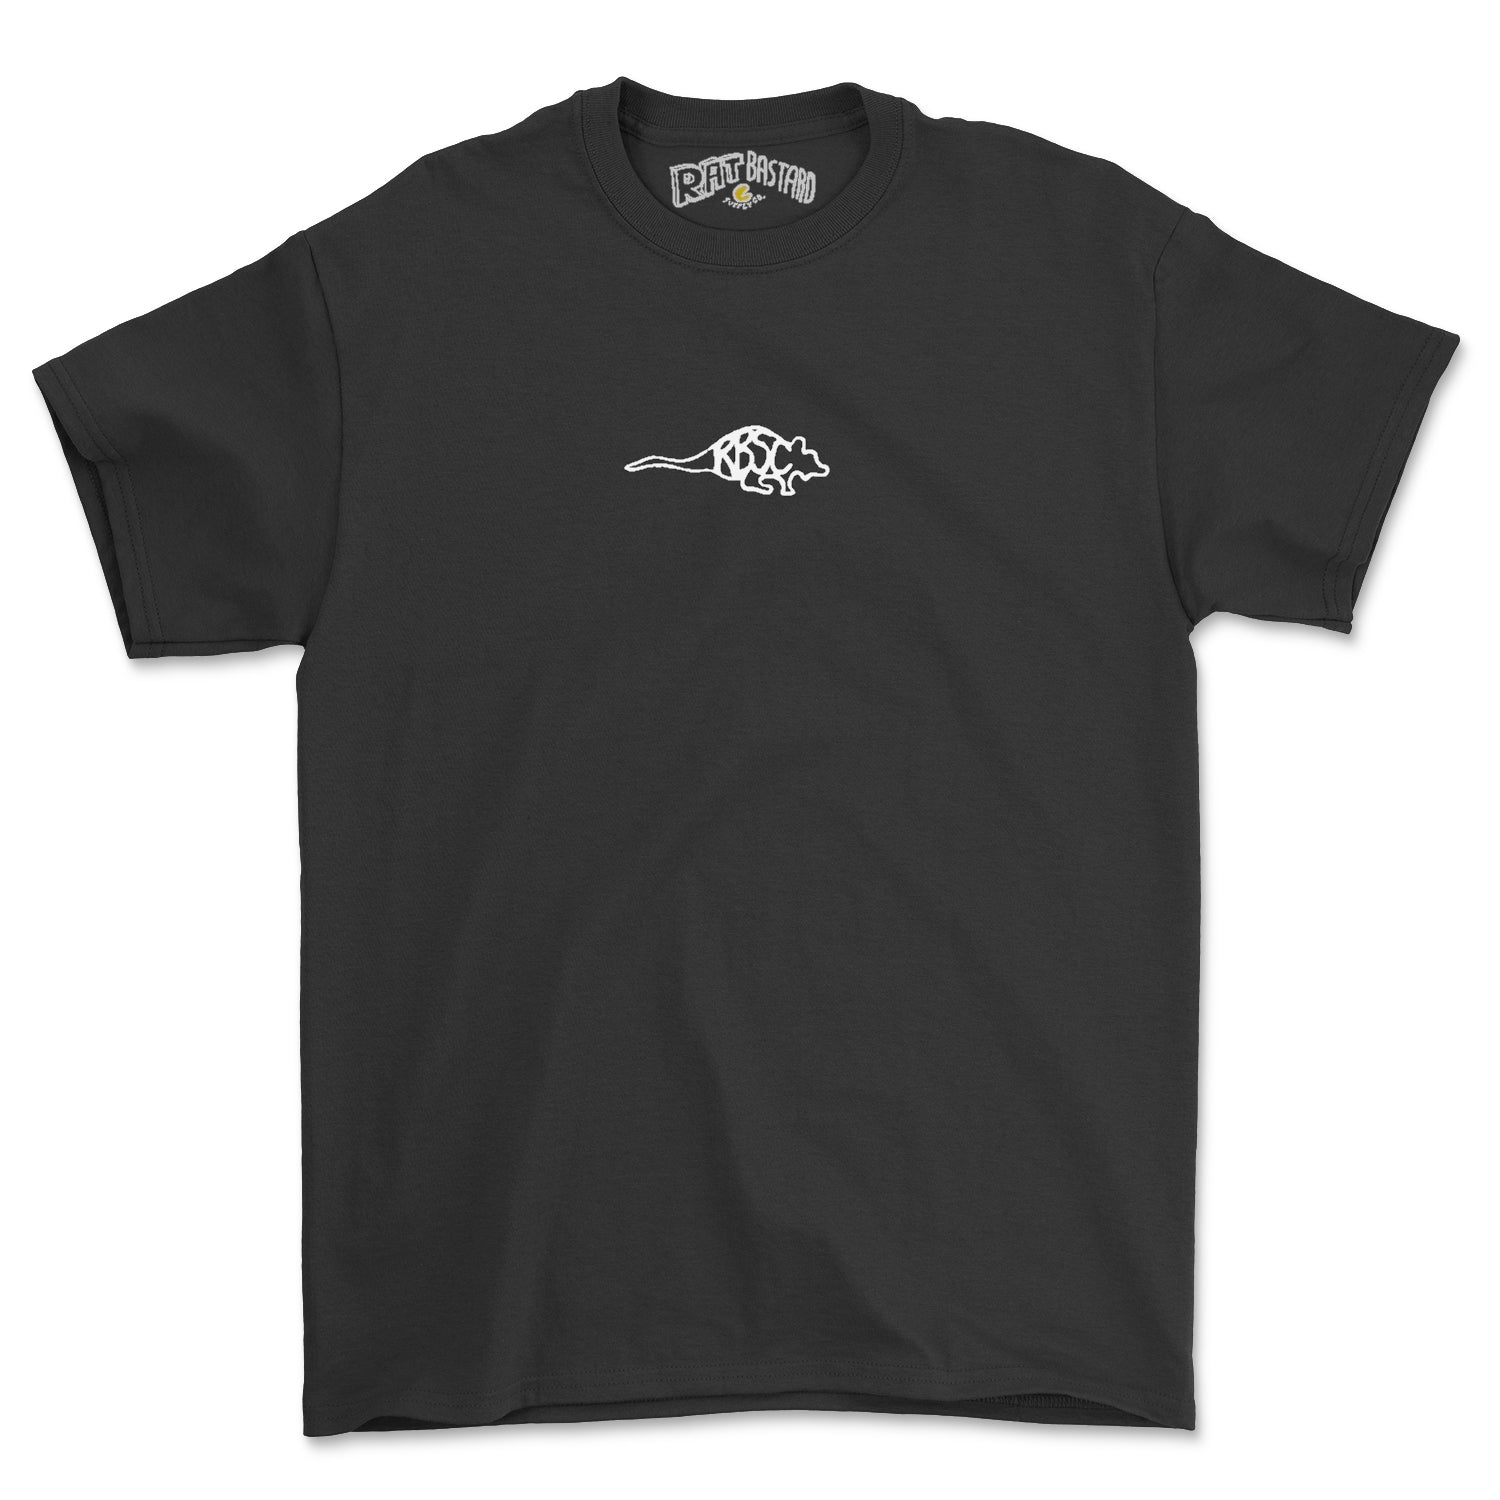 The Air Rat Graphic Tee Shirt